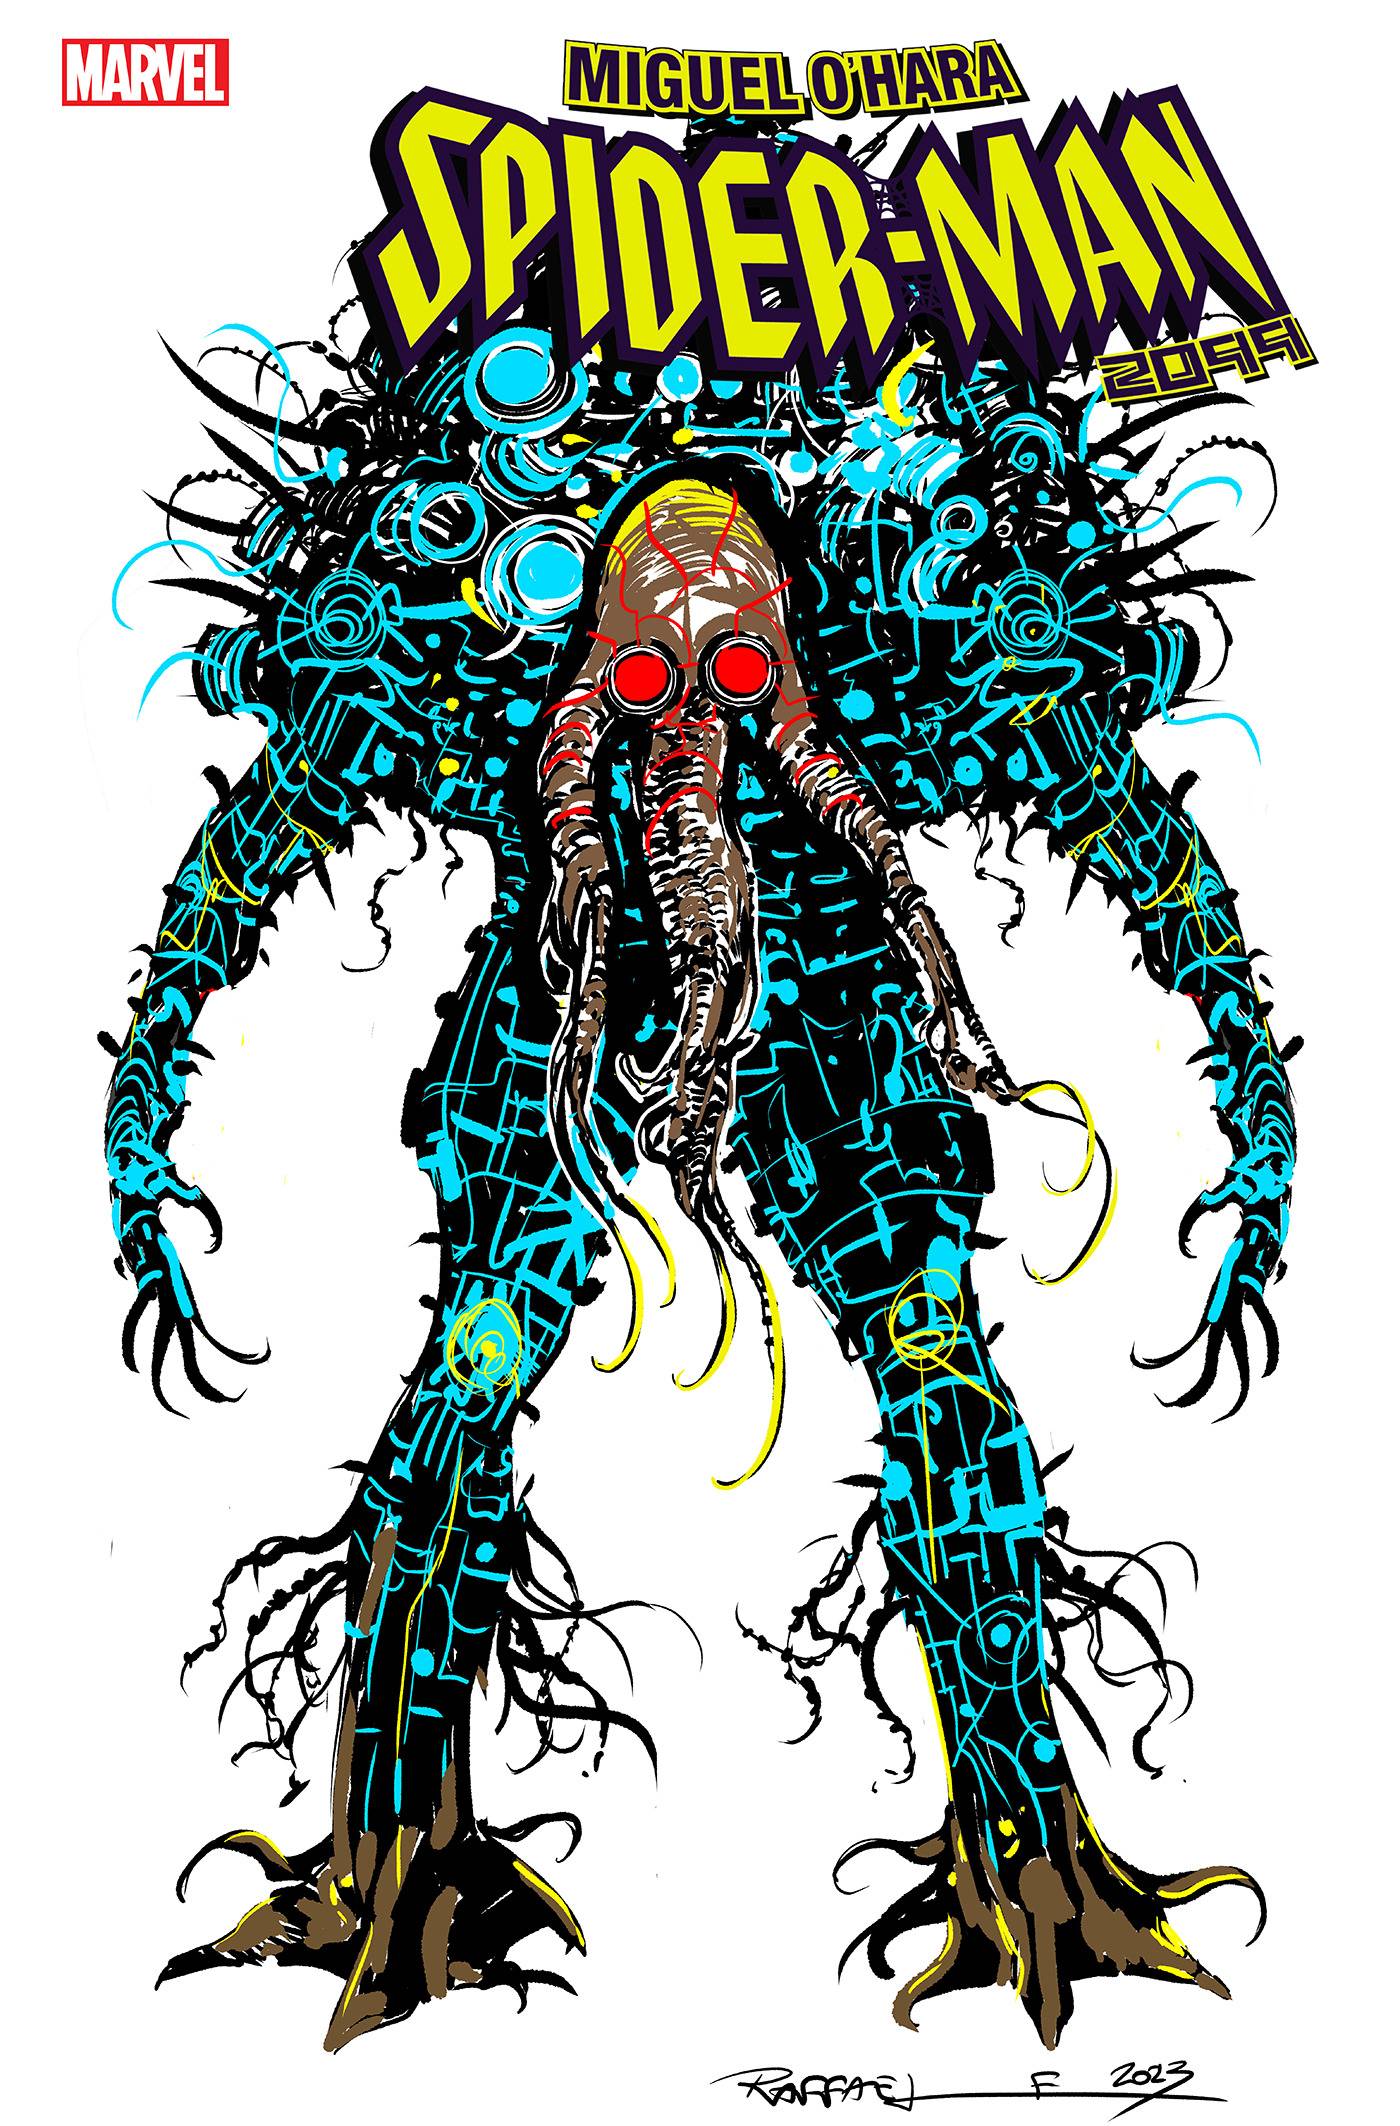 MIGUEL OHARA SPIDER-MAN 2099 #5 10 COPY INCV RAFFAELE DESIGN